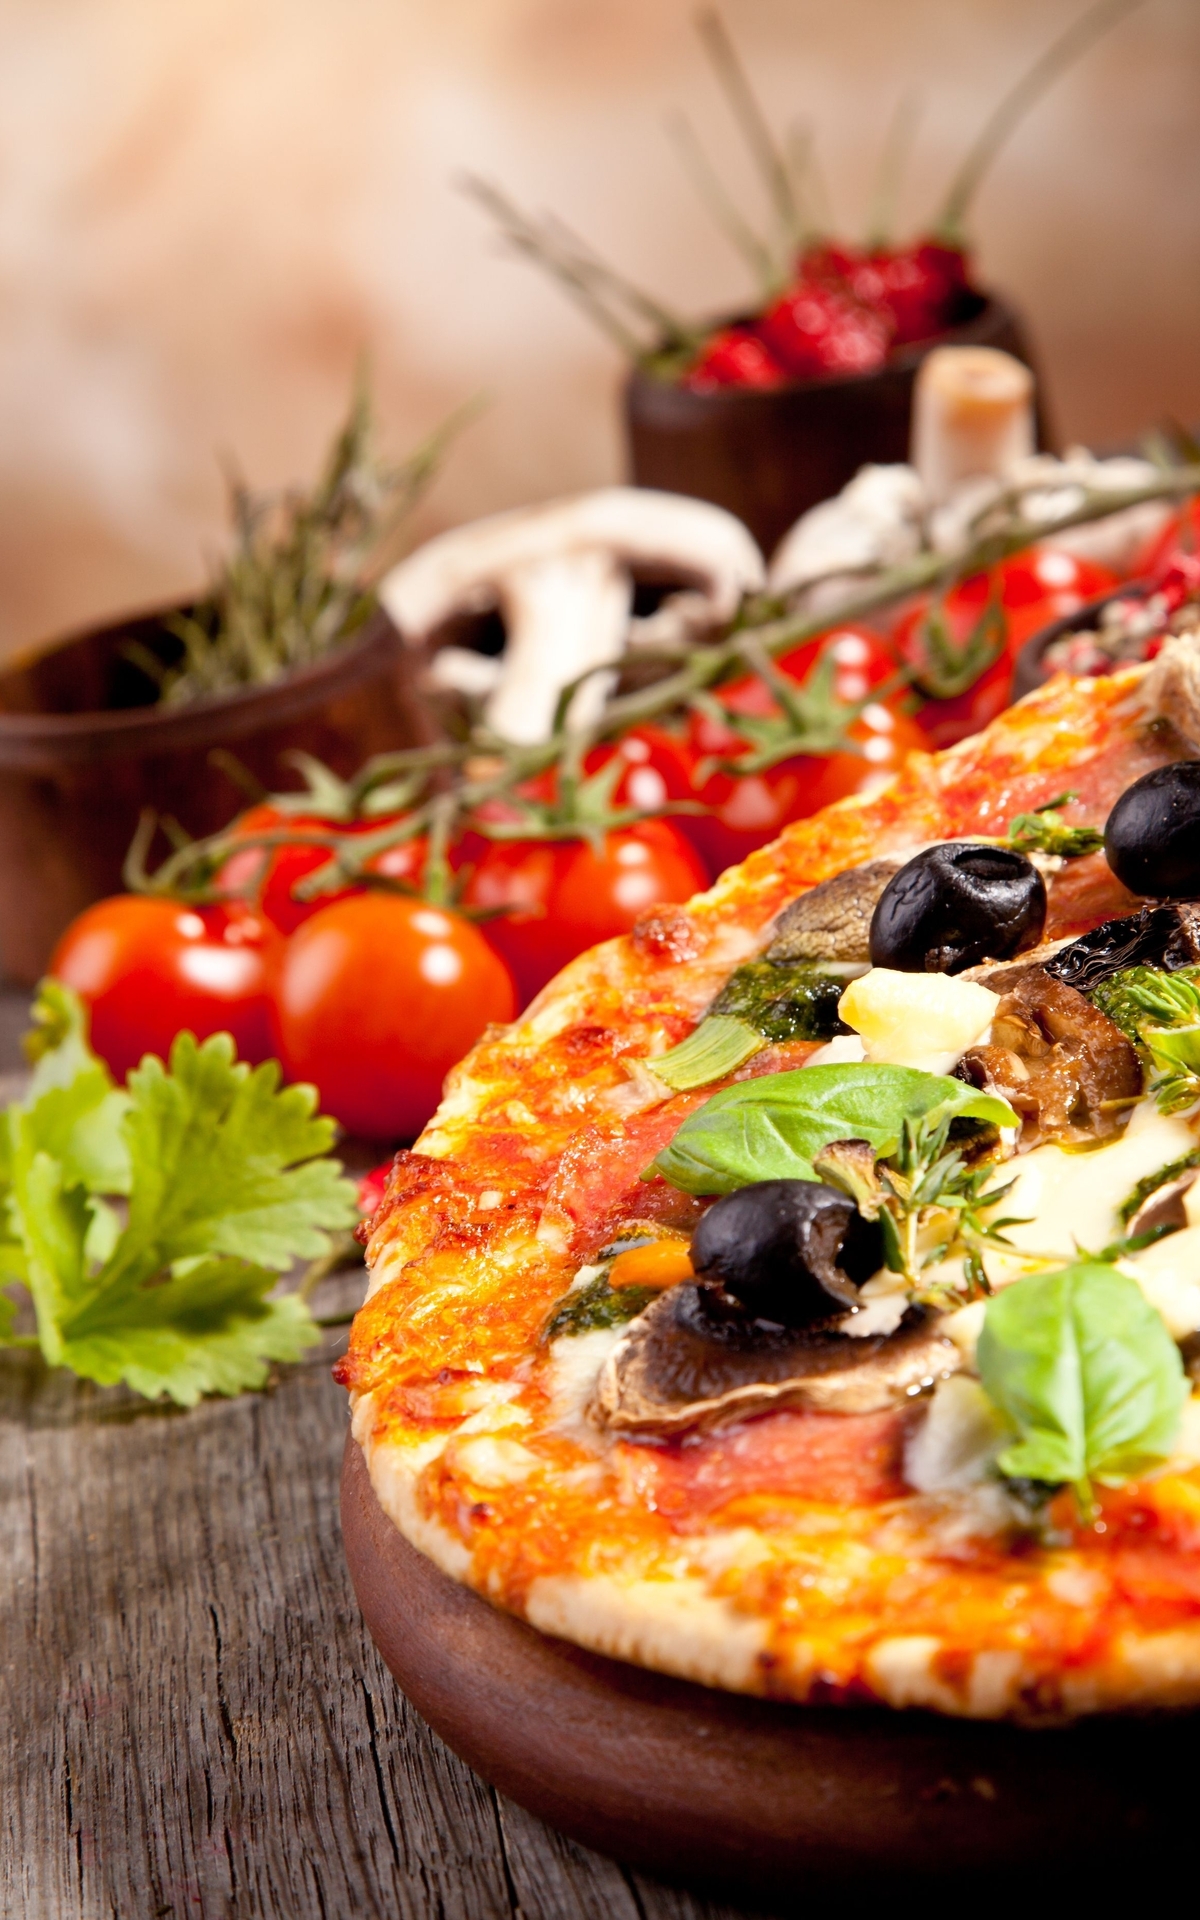 Картинка: Пицца, оливки, зелень, помидоры, грибы